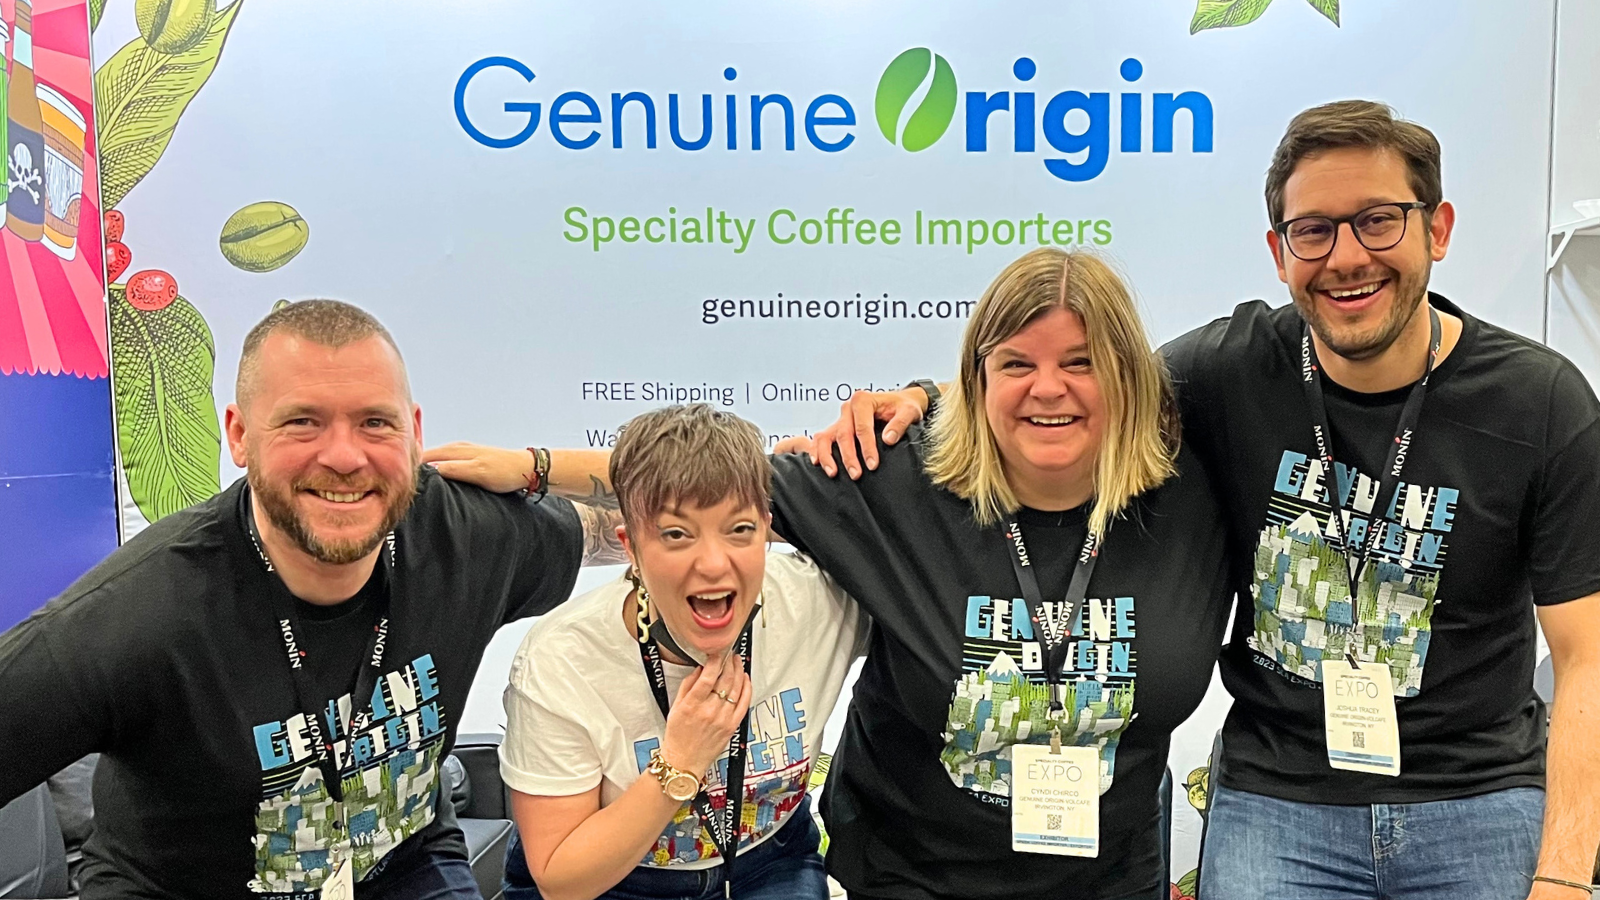 Genuine Origin team members Jay, Jen, Cyndi and Josh at the Genuine Origin booth at Coffee EXPO 2023